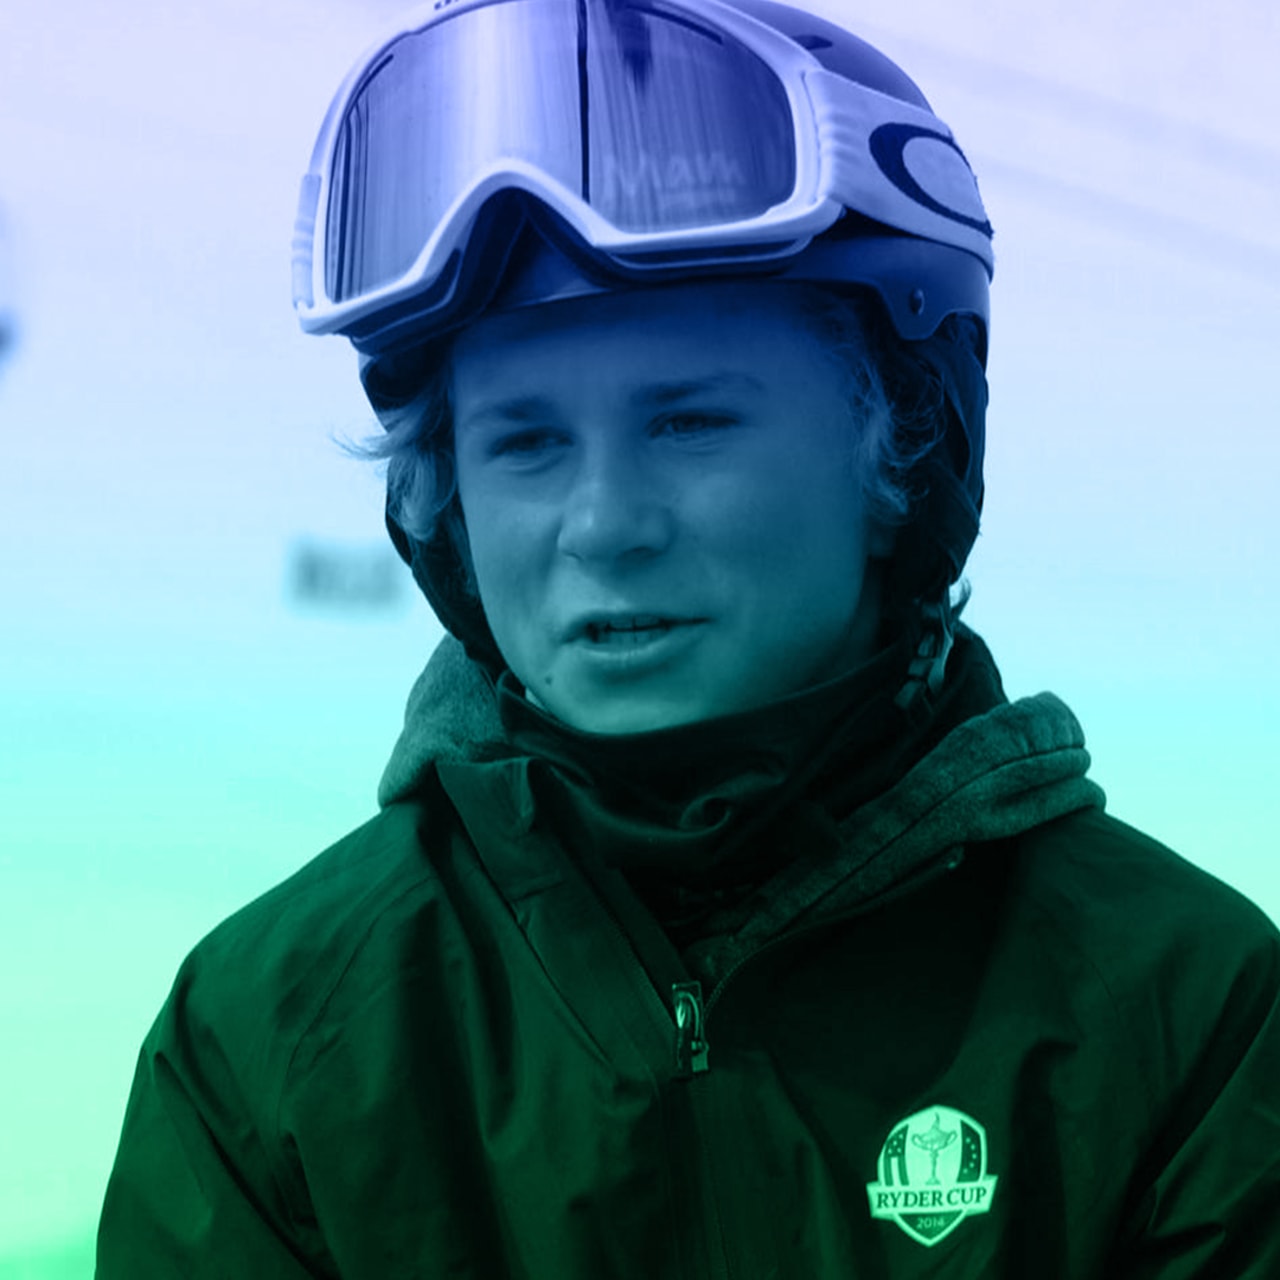 Shaun White - 🐐 of the snowboard 🇺🇸🏂 